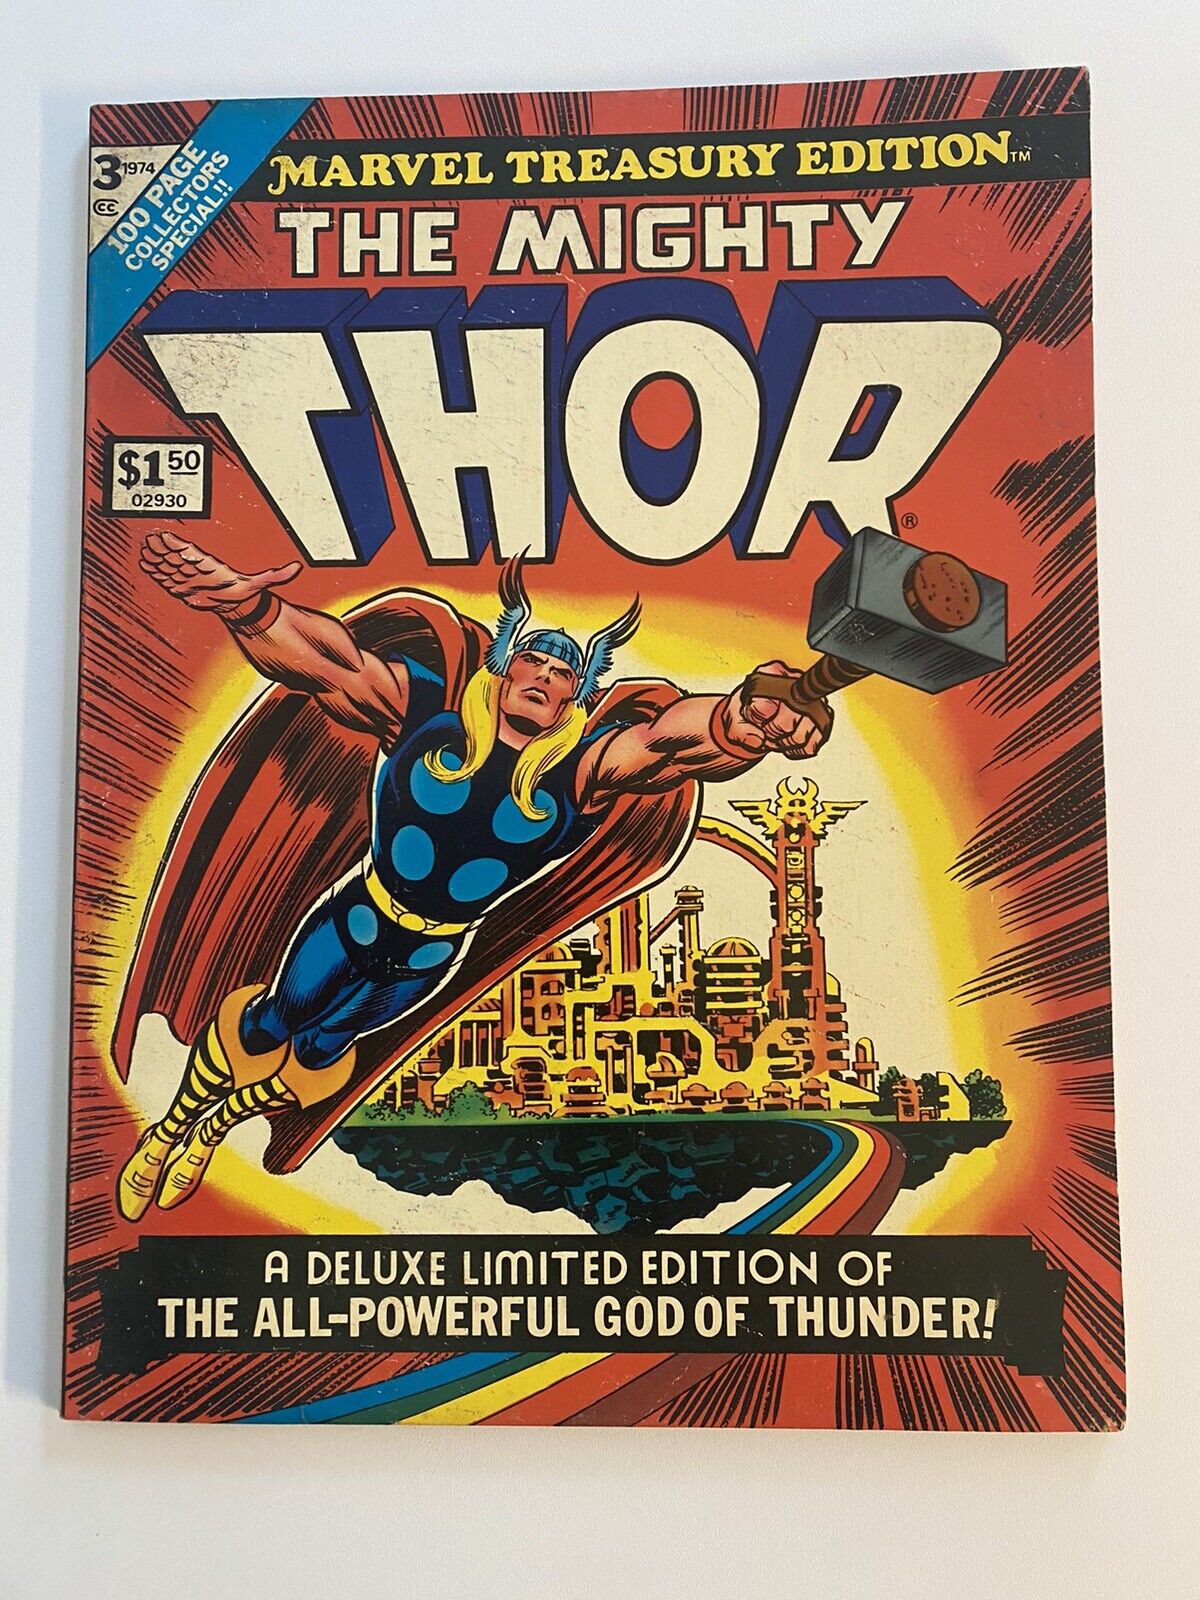 1974 Marvel Treasury Edition The Mighty Thor Comic Book #3